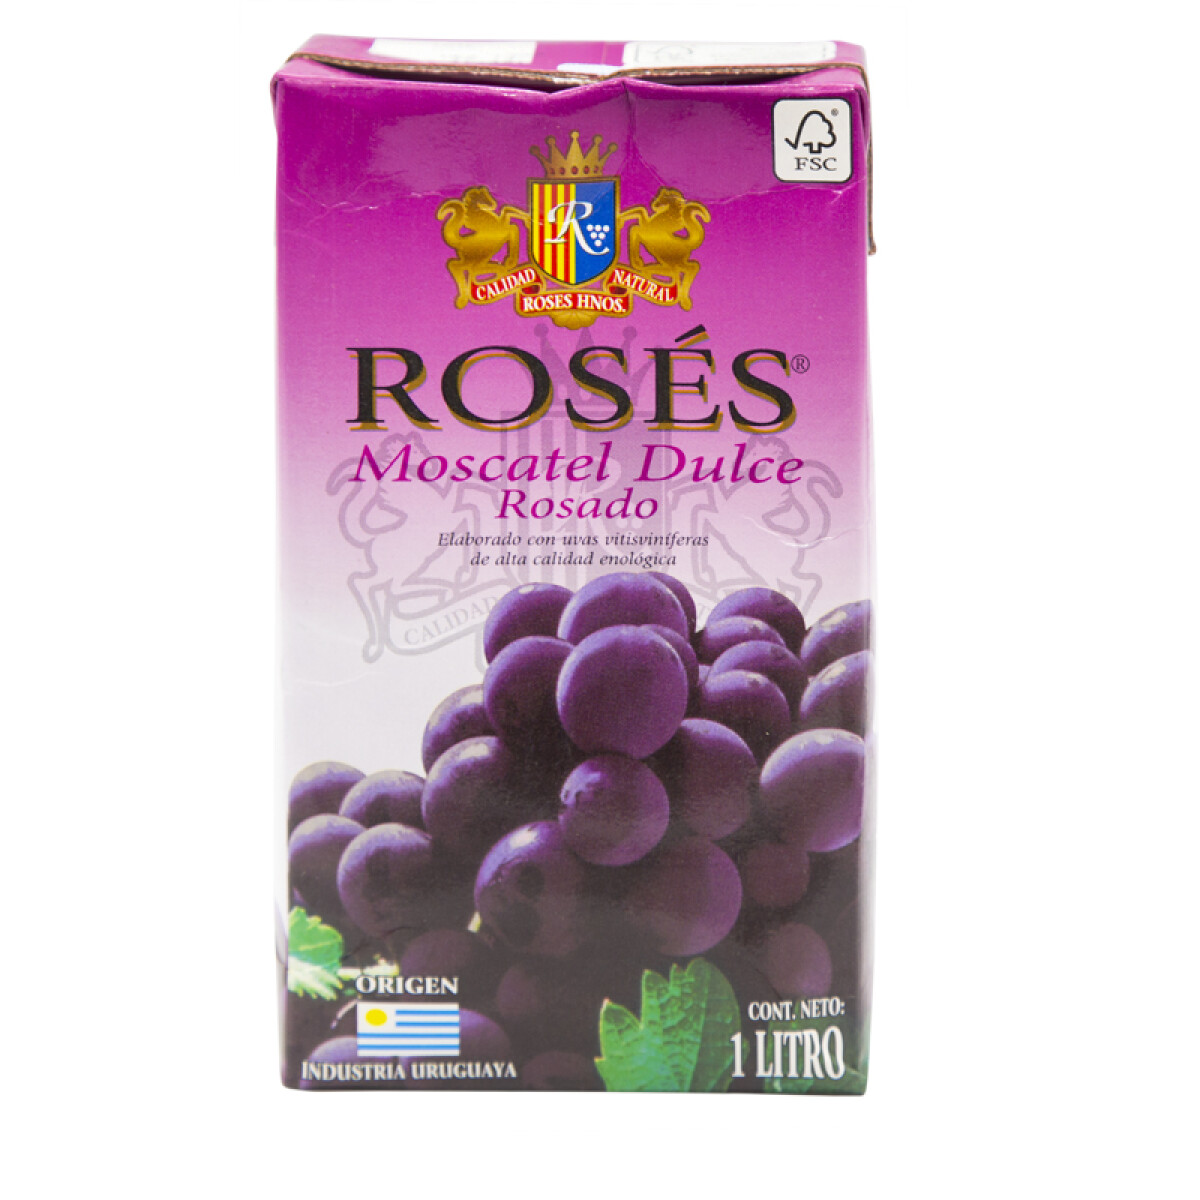 Vino ROSES 1L Tetra - Rosado moscatel dulce 